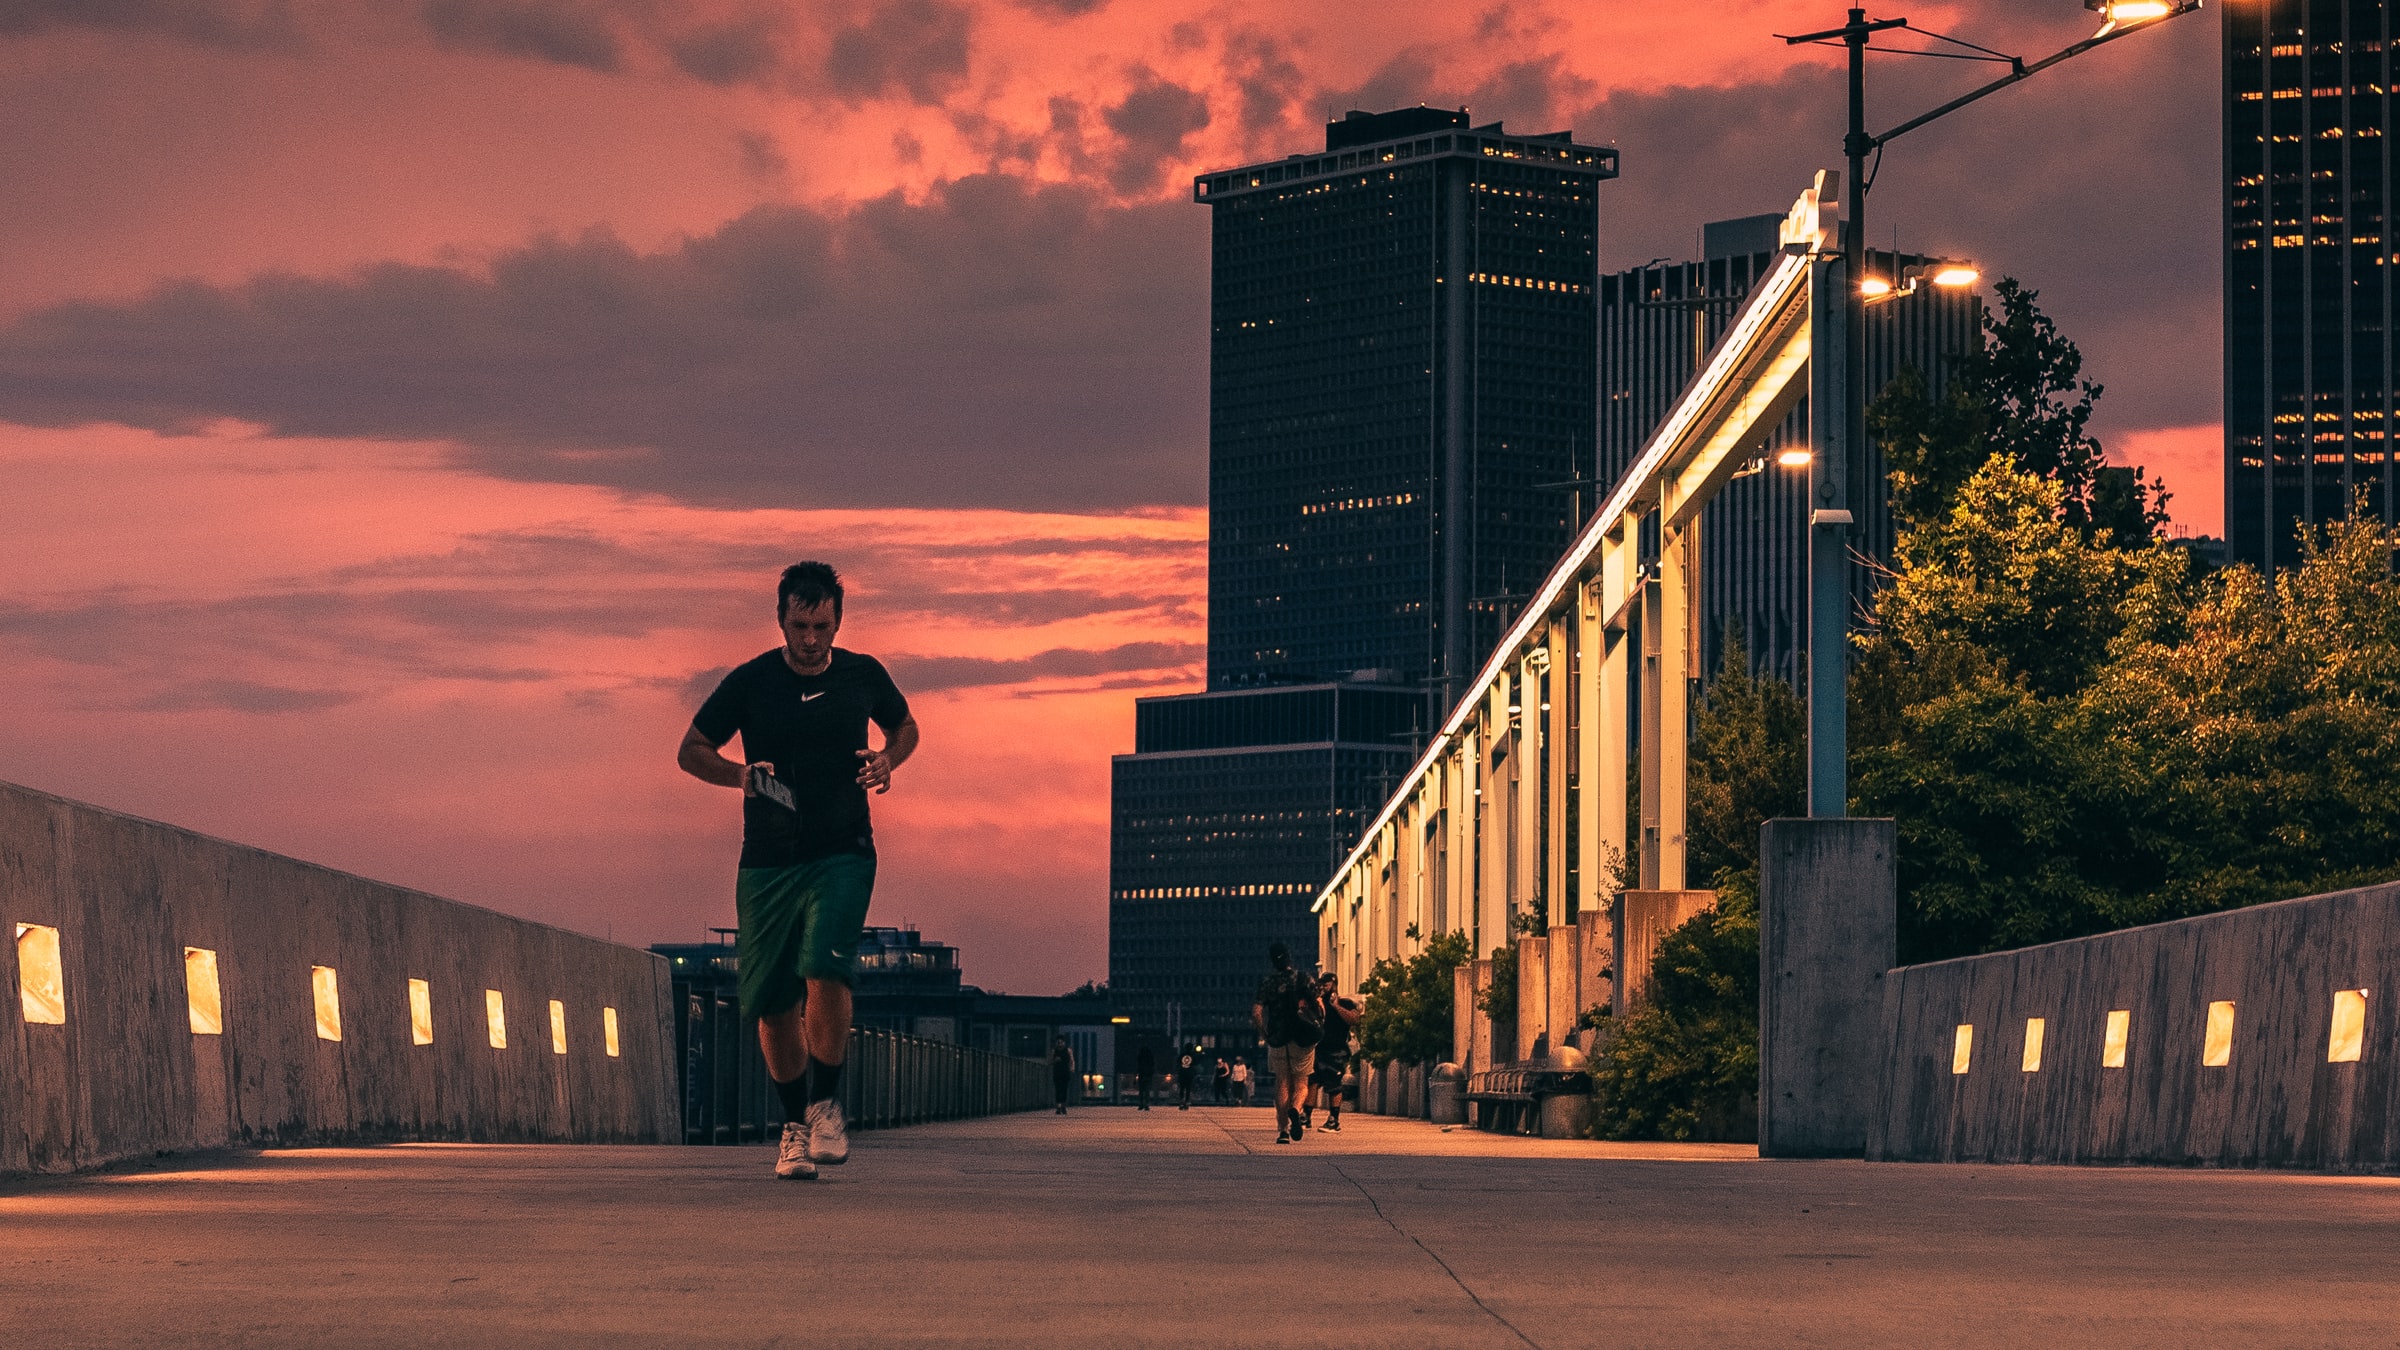 Fitness: Laufen bei Nacht – Geheimtipp oder Schnapsidee? 0 (0)